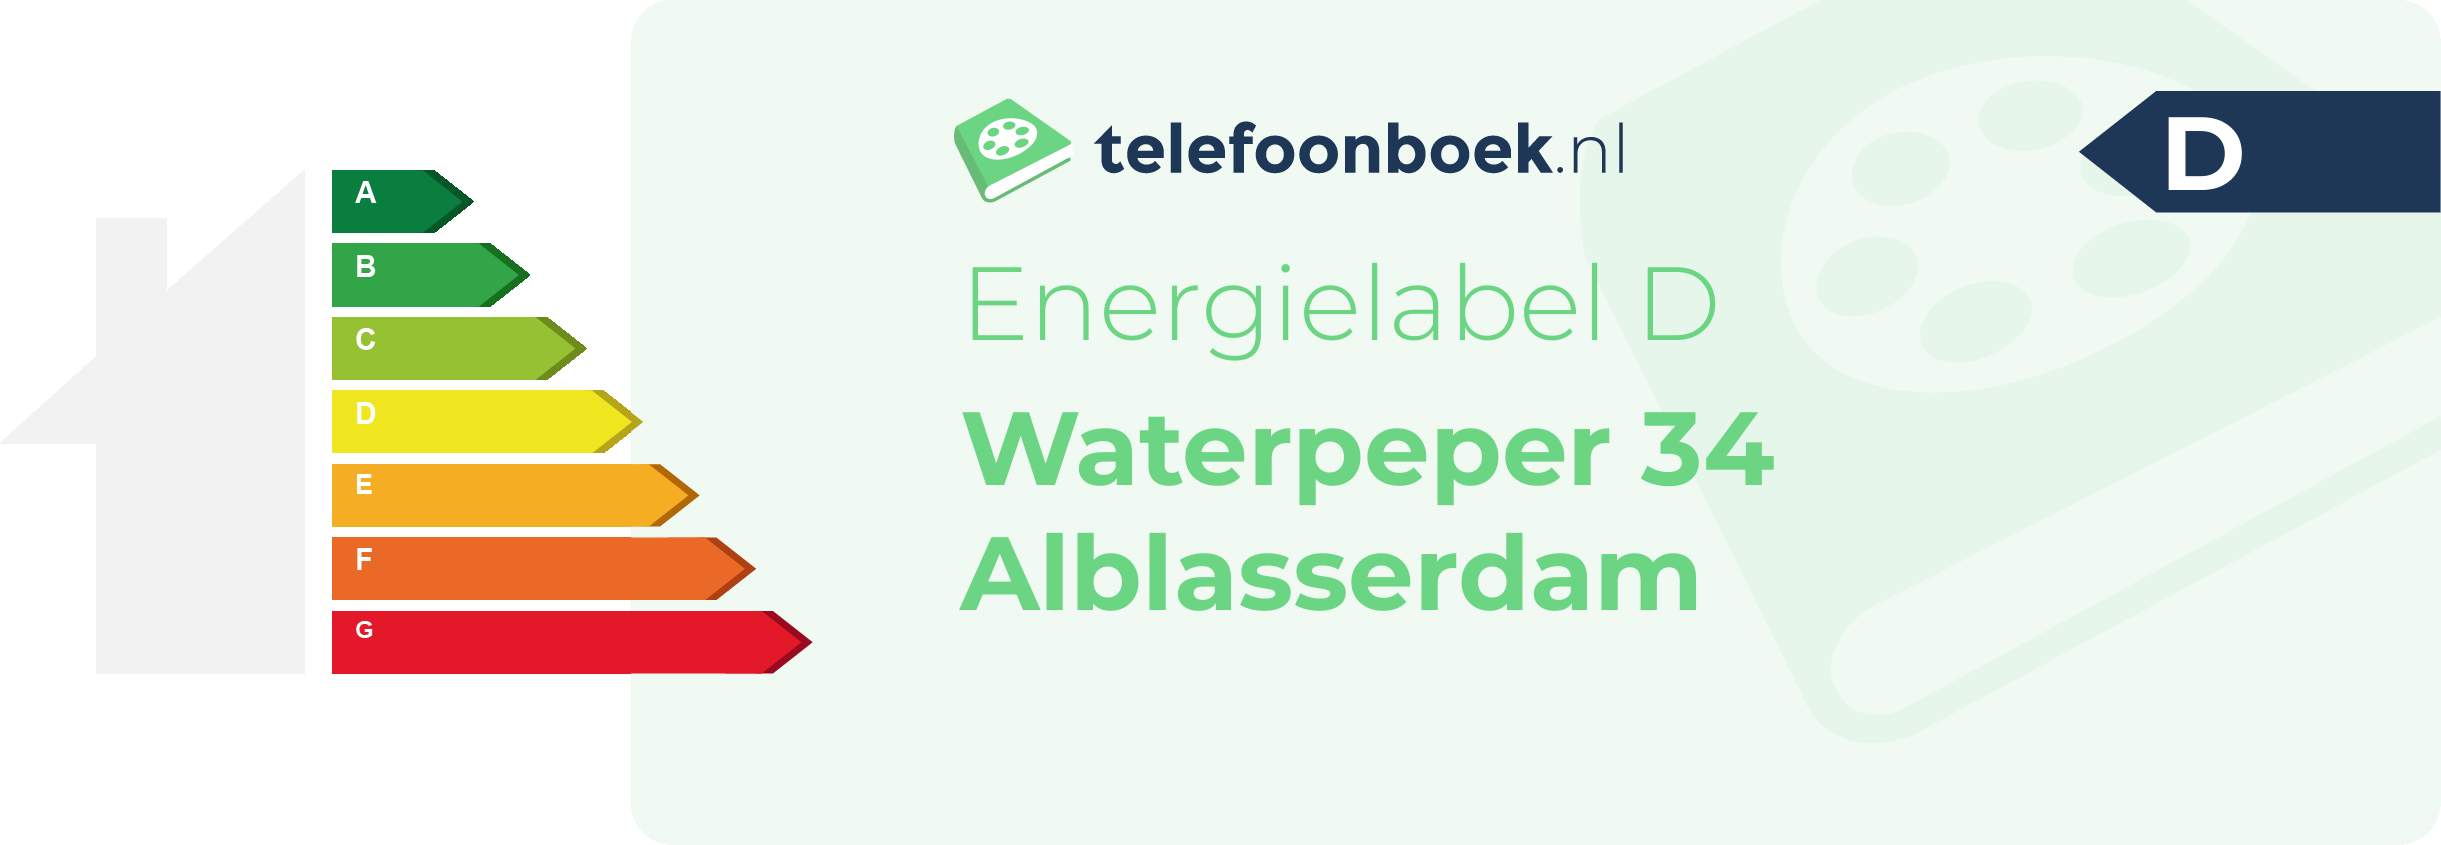 Energielabel Waterpeper 34 Alblasserdam